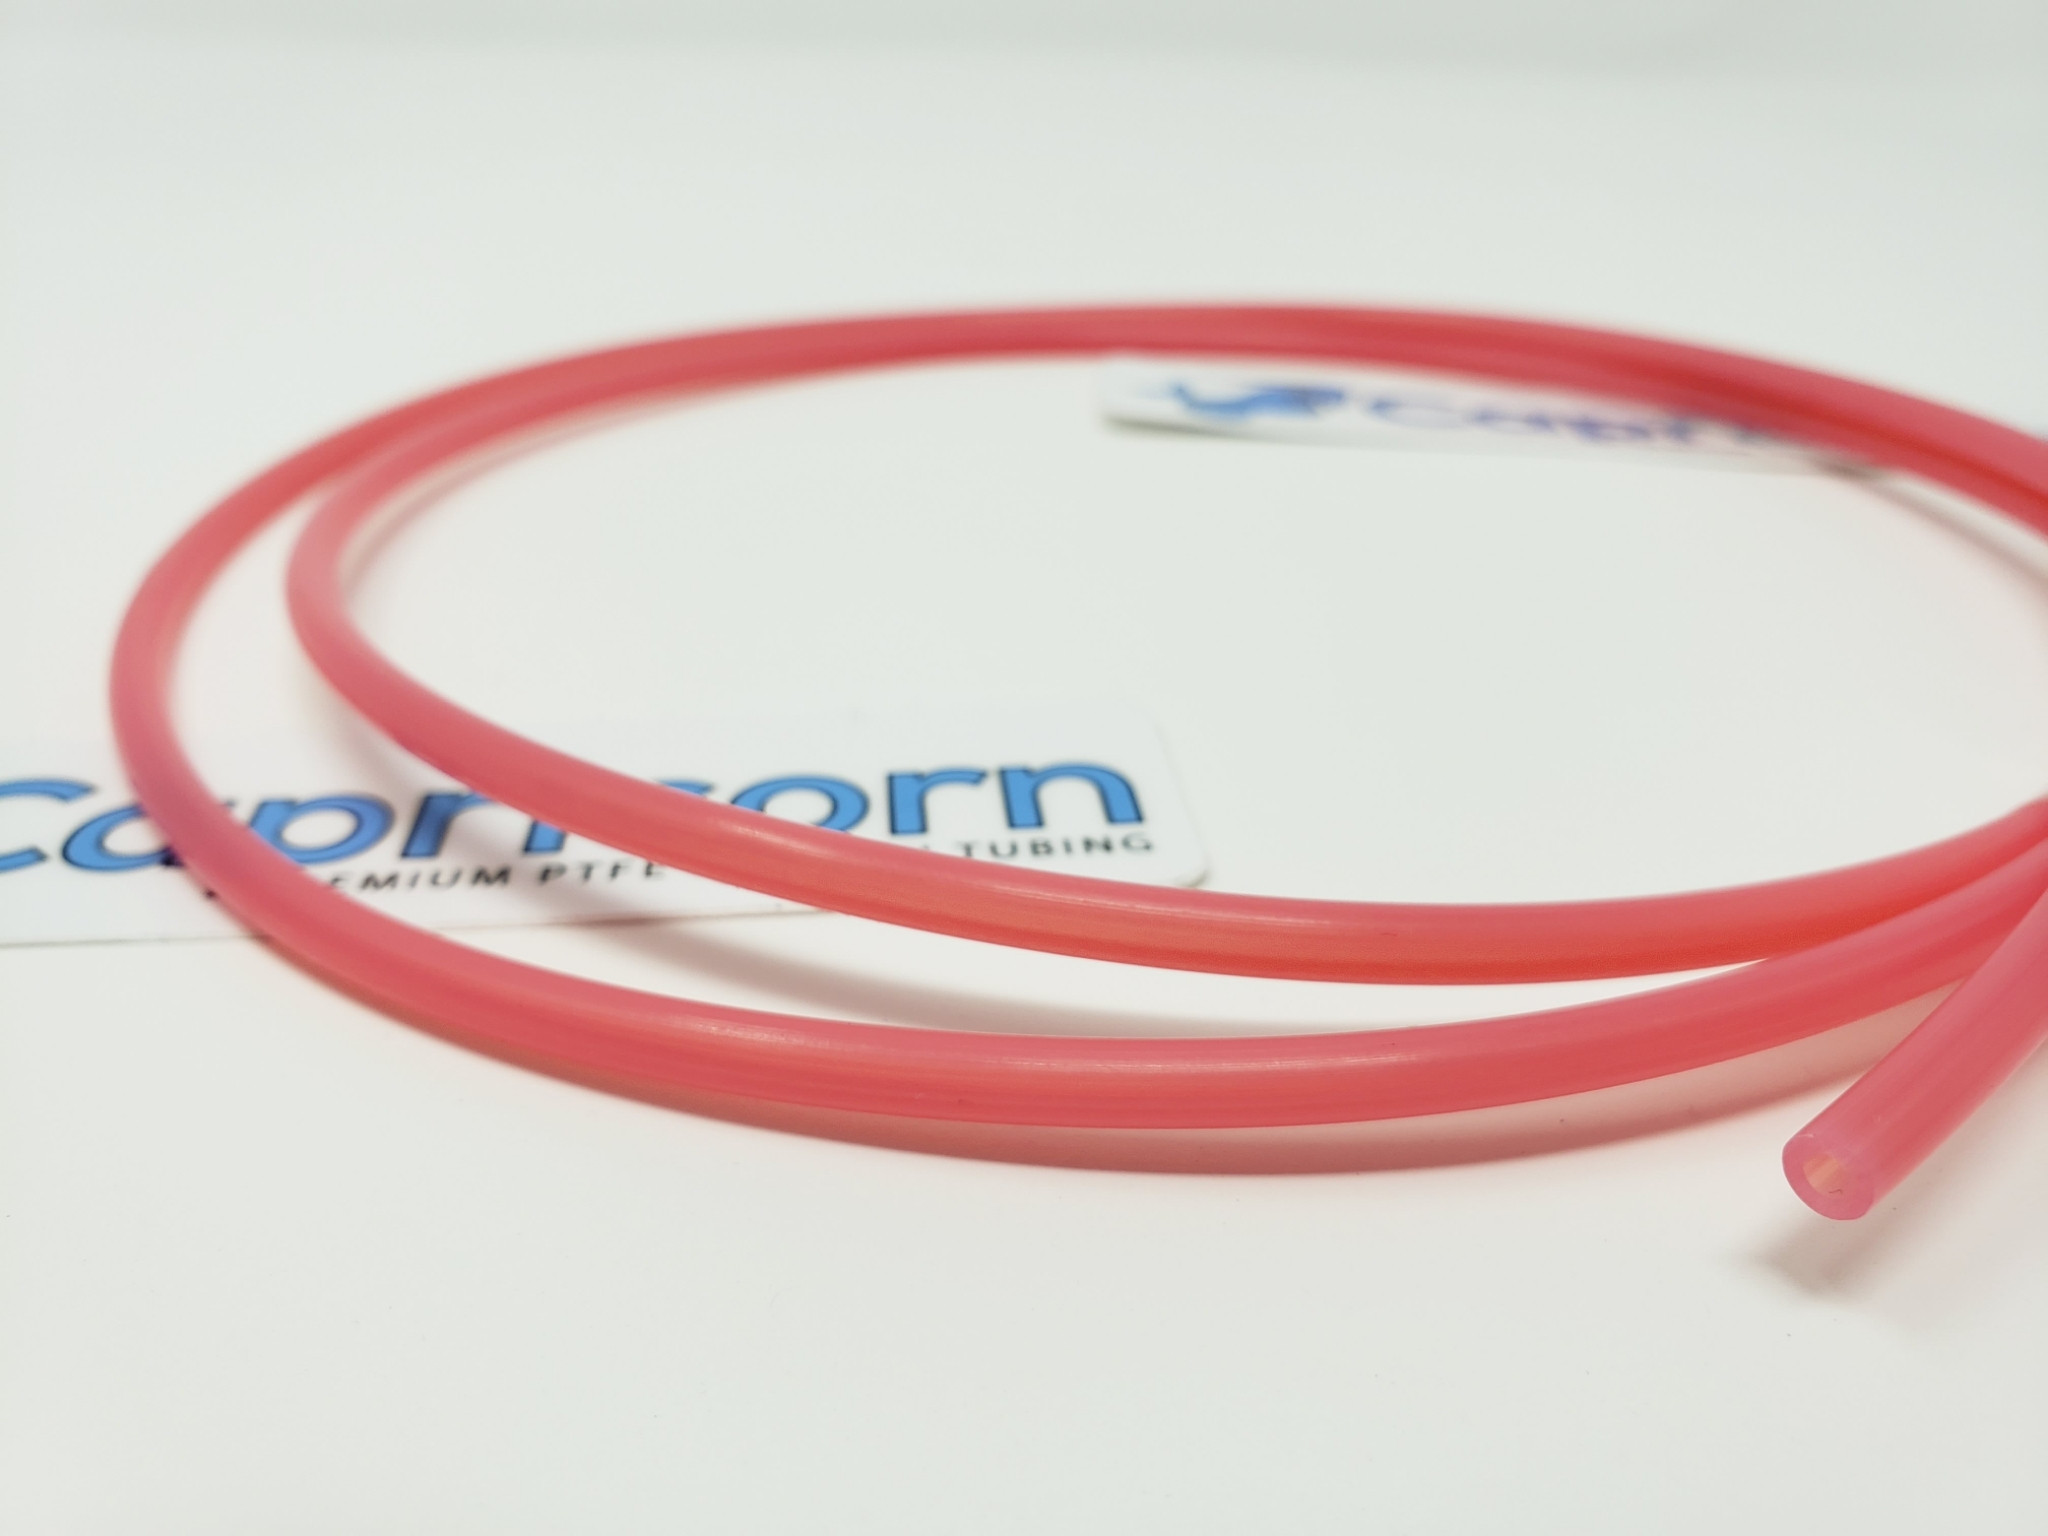 Capricorn Bowden PTFE Tubing XS Series 1M/2M 1.75mm Filament Tube